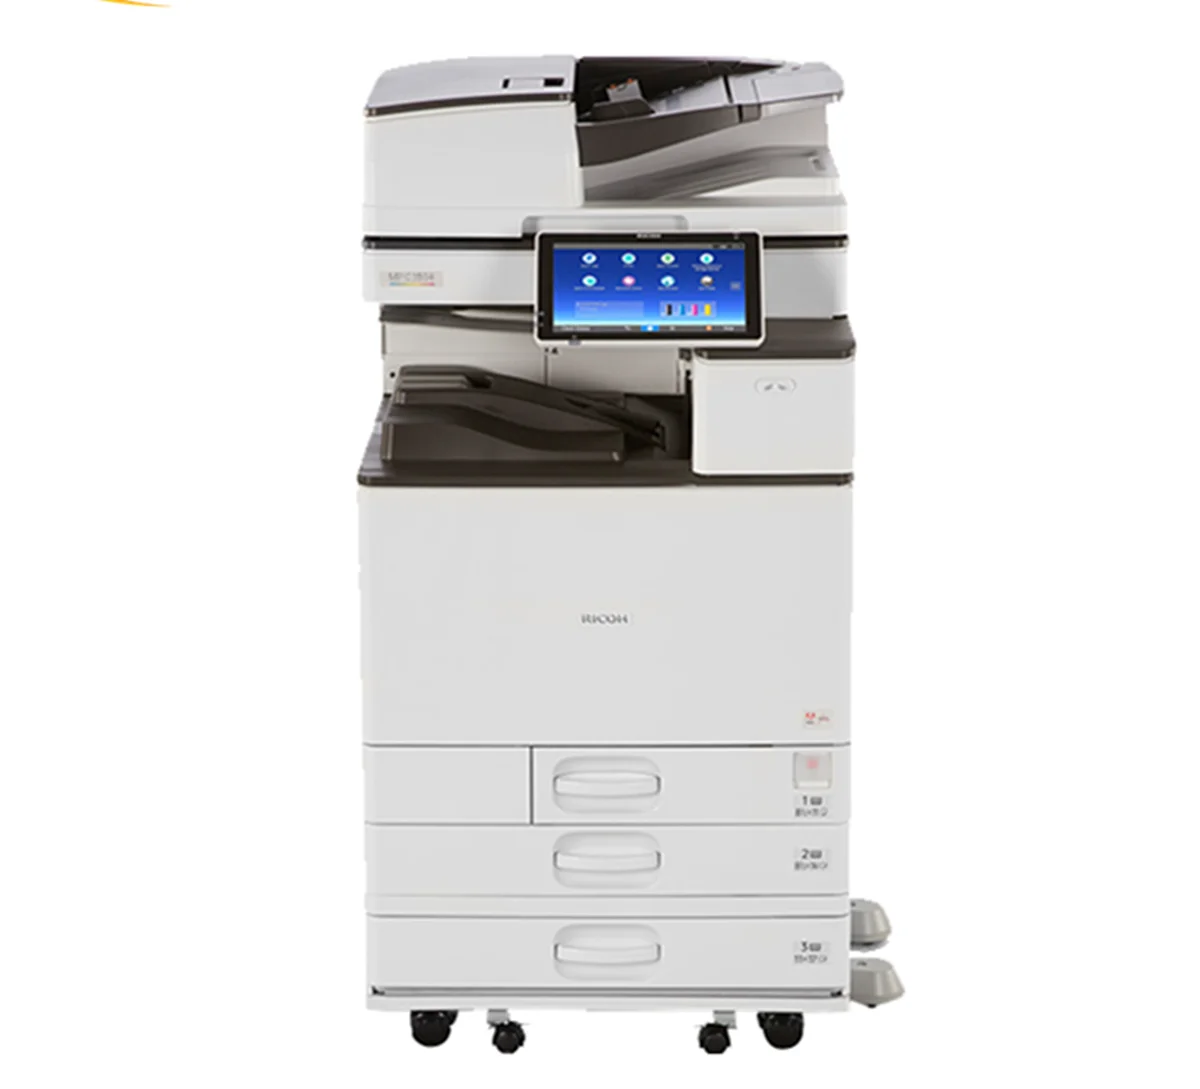 

Hot sell Color laser printers for Ricoh copier machine Aficio MPC 3504 remanufactured photocopy machine